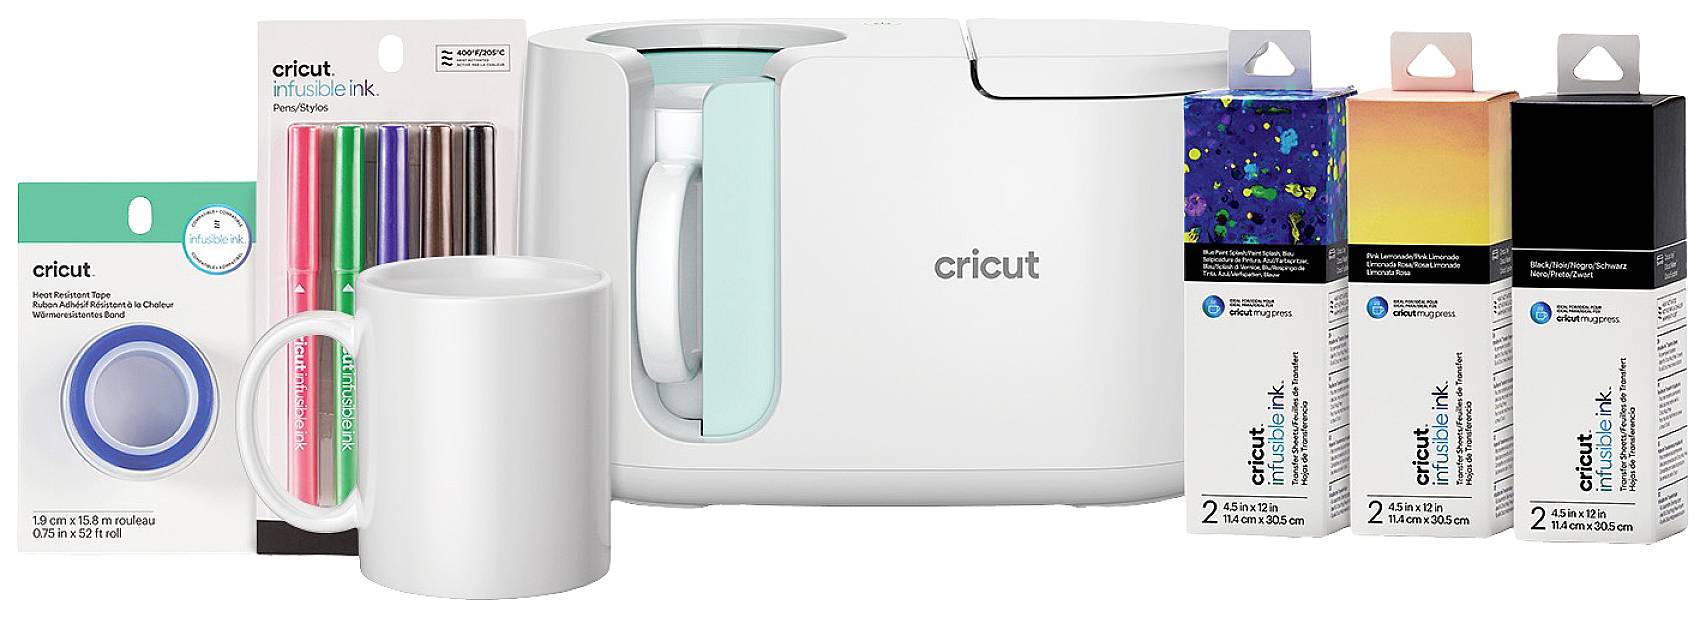 Cricut Mug Press available in Australia and New Zealand – Cricut